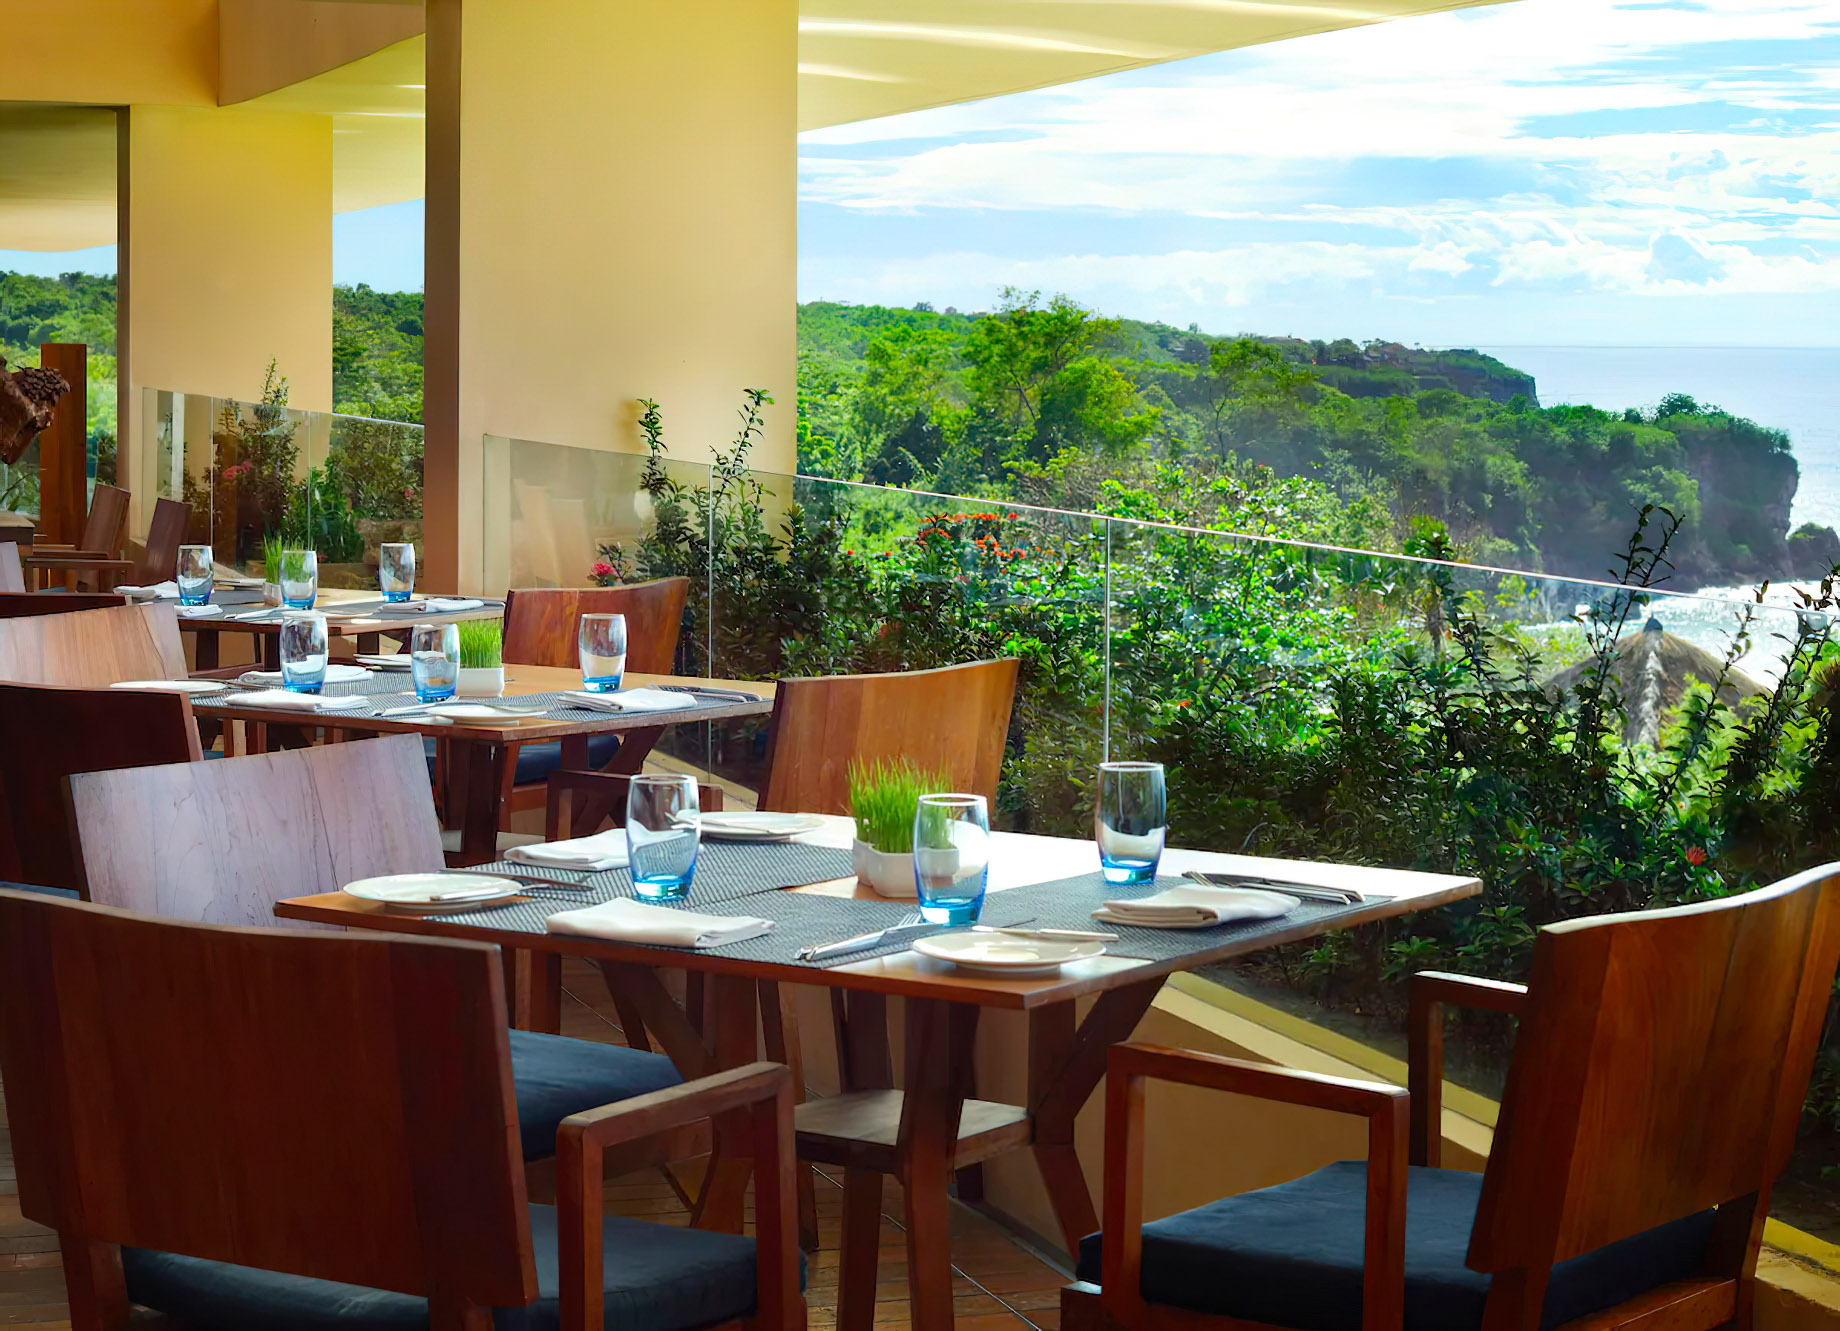 Anantara Uluwatu Bali Resort - Bali, Indonesia - Restaurant Ocean View